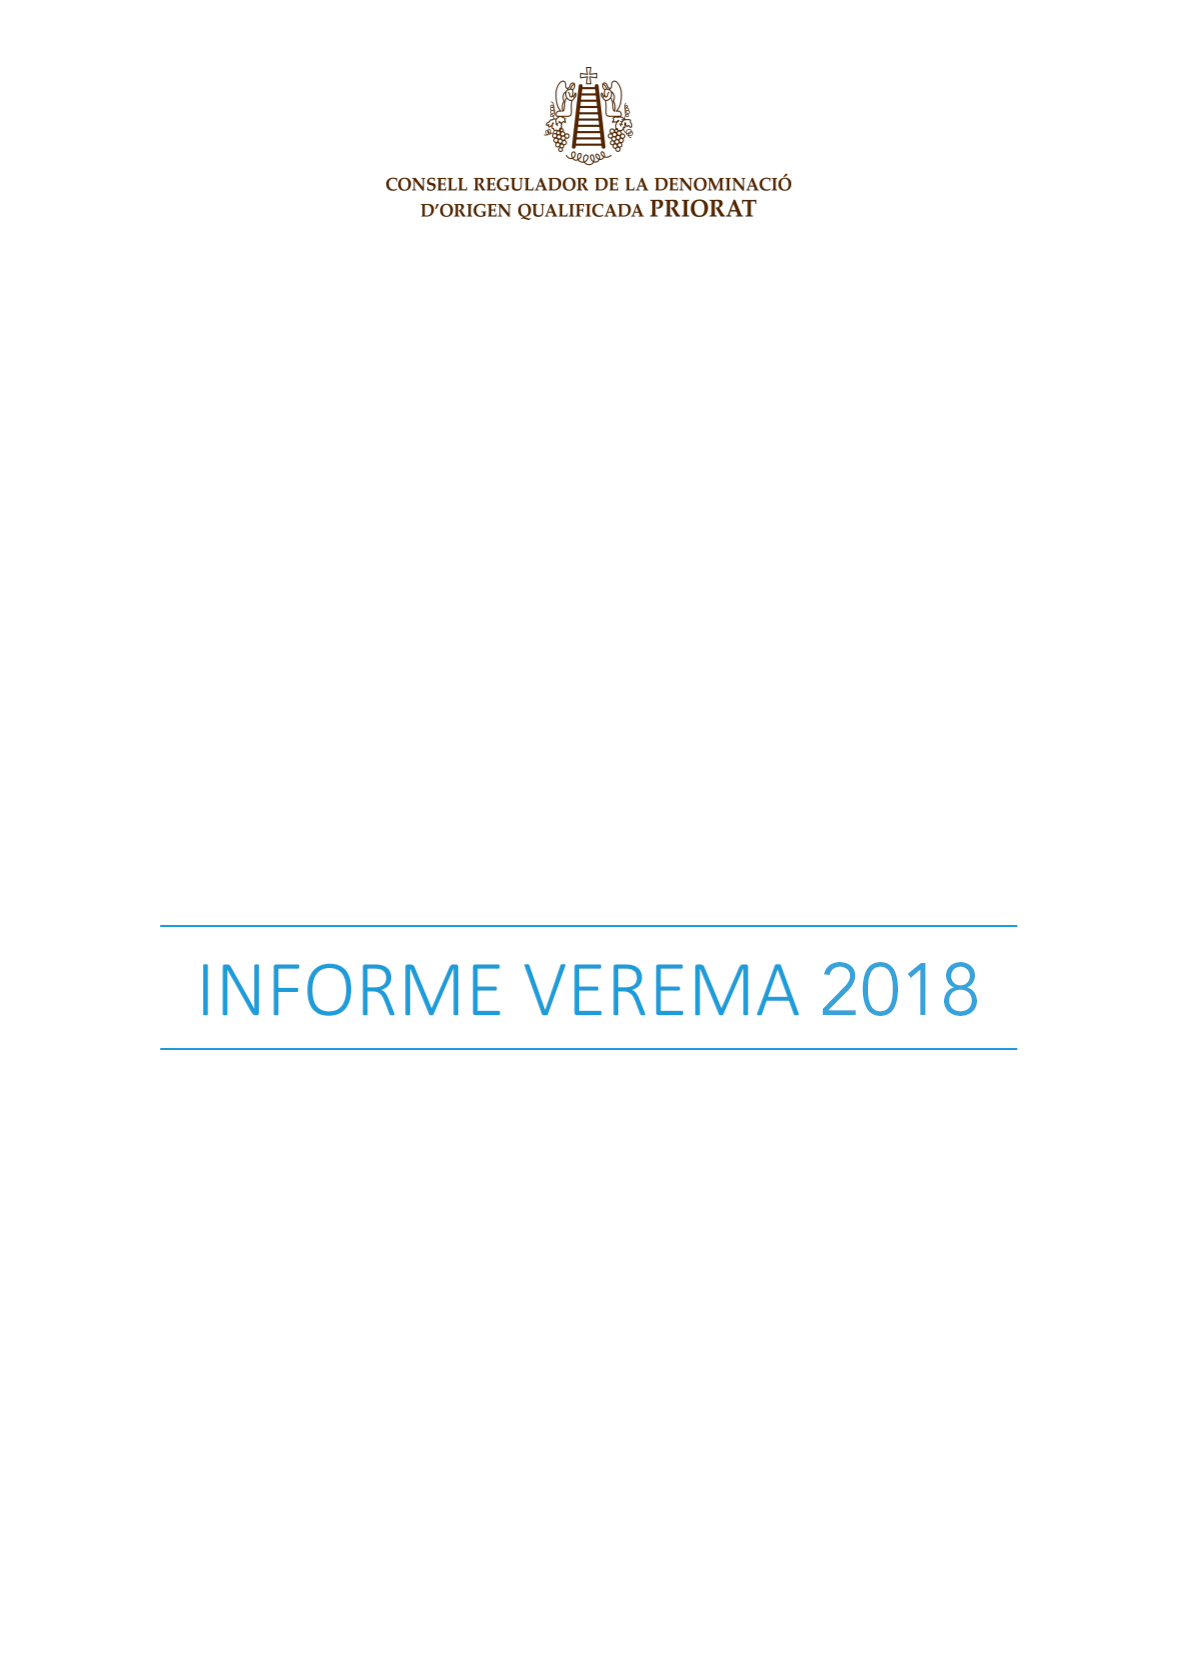 Informe de verema 2018